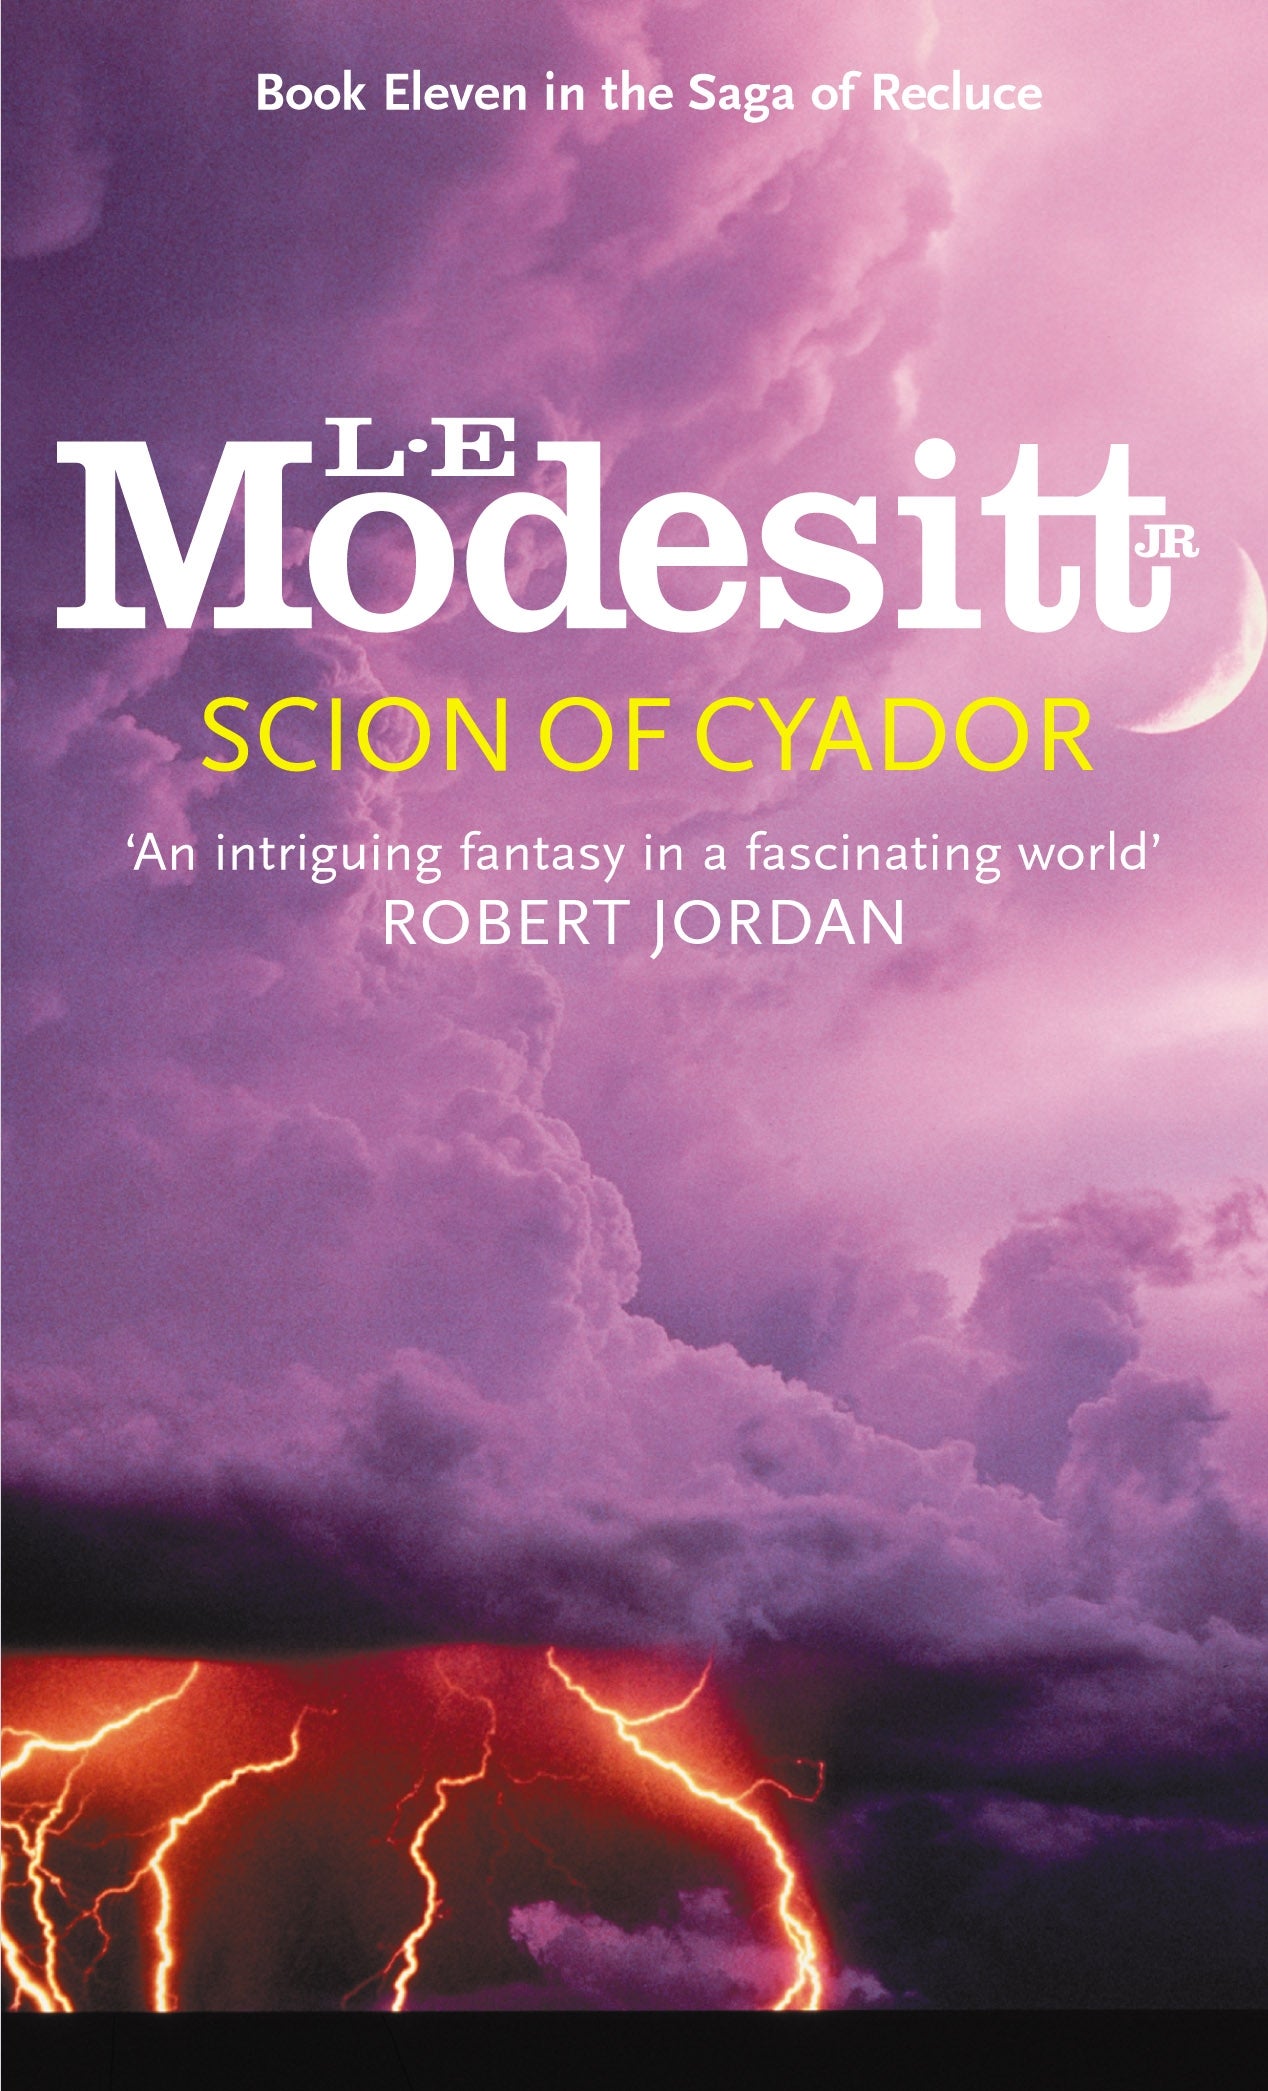 Scion Of Cyador by L. E. Modesitt Jr.